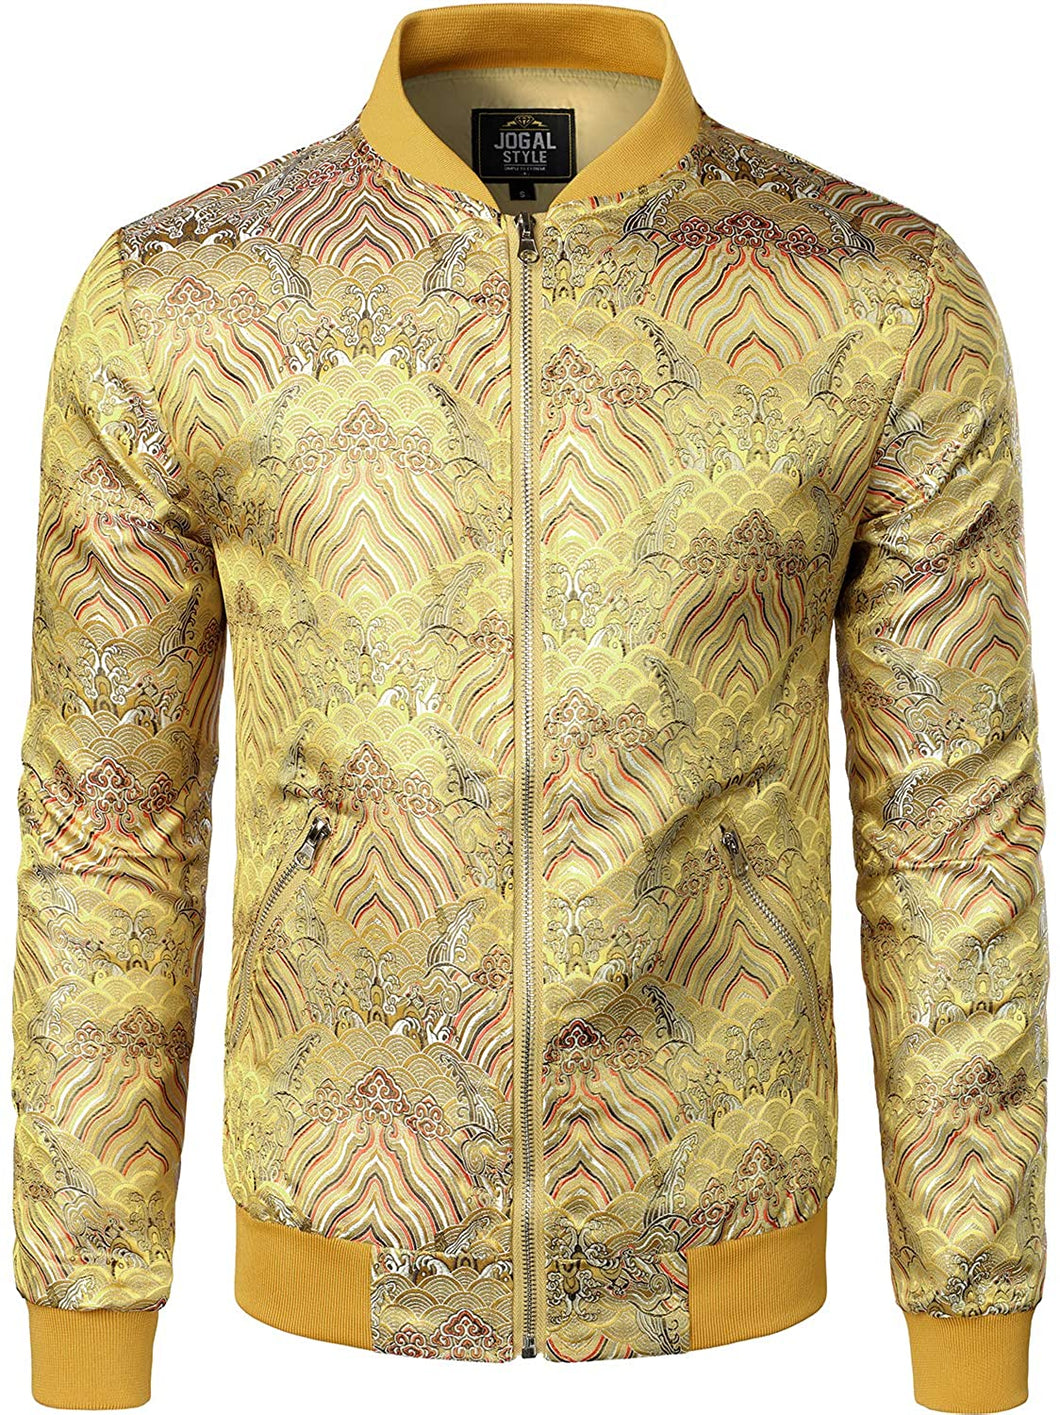 Men's Yellow Luxury Paisley Jacket